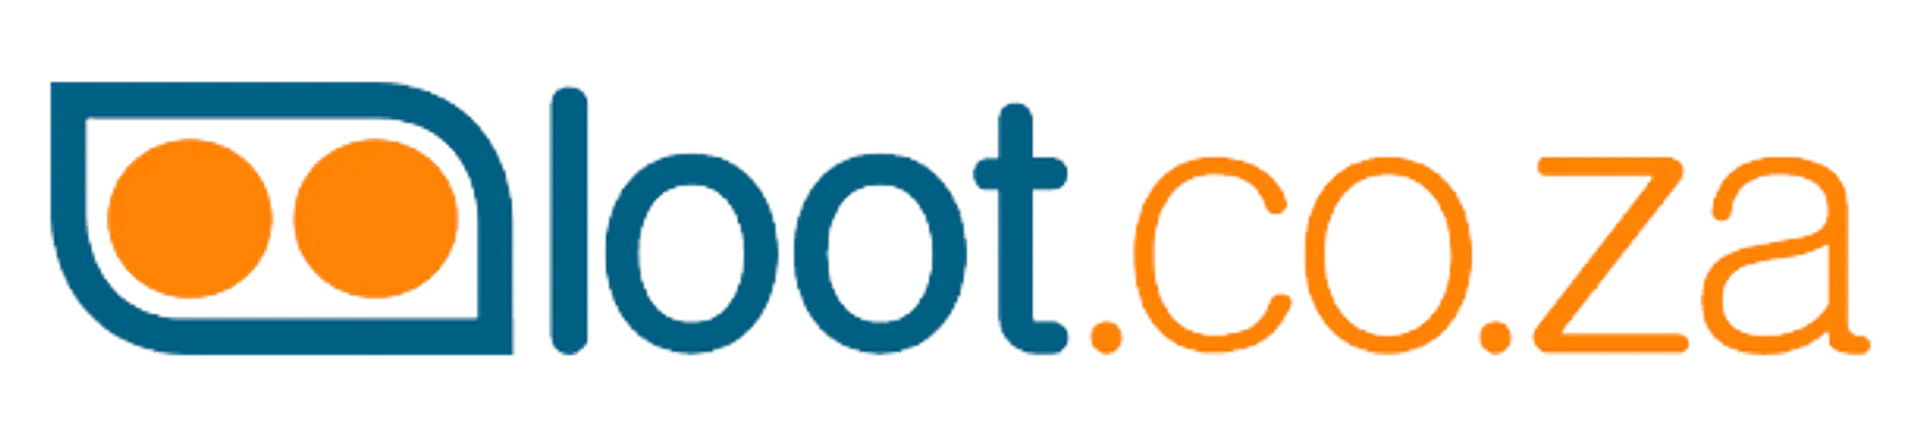 LOOT logo. Current weekly ad